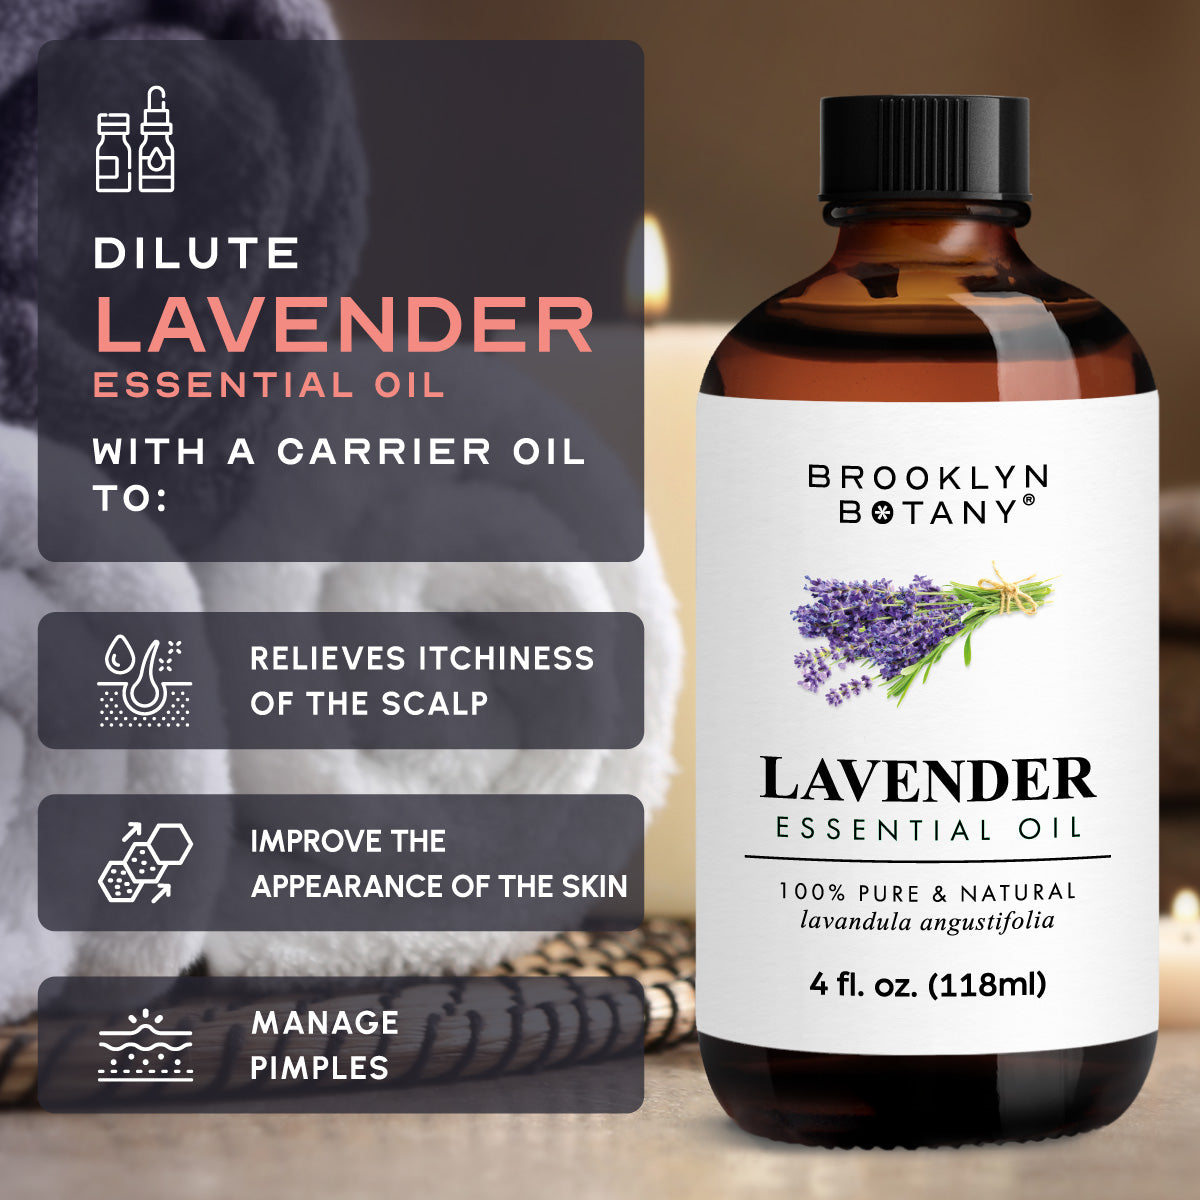 Pure Lavender Essential Oil